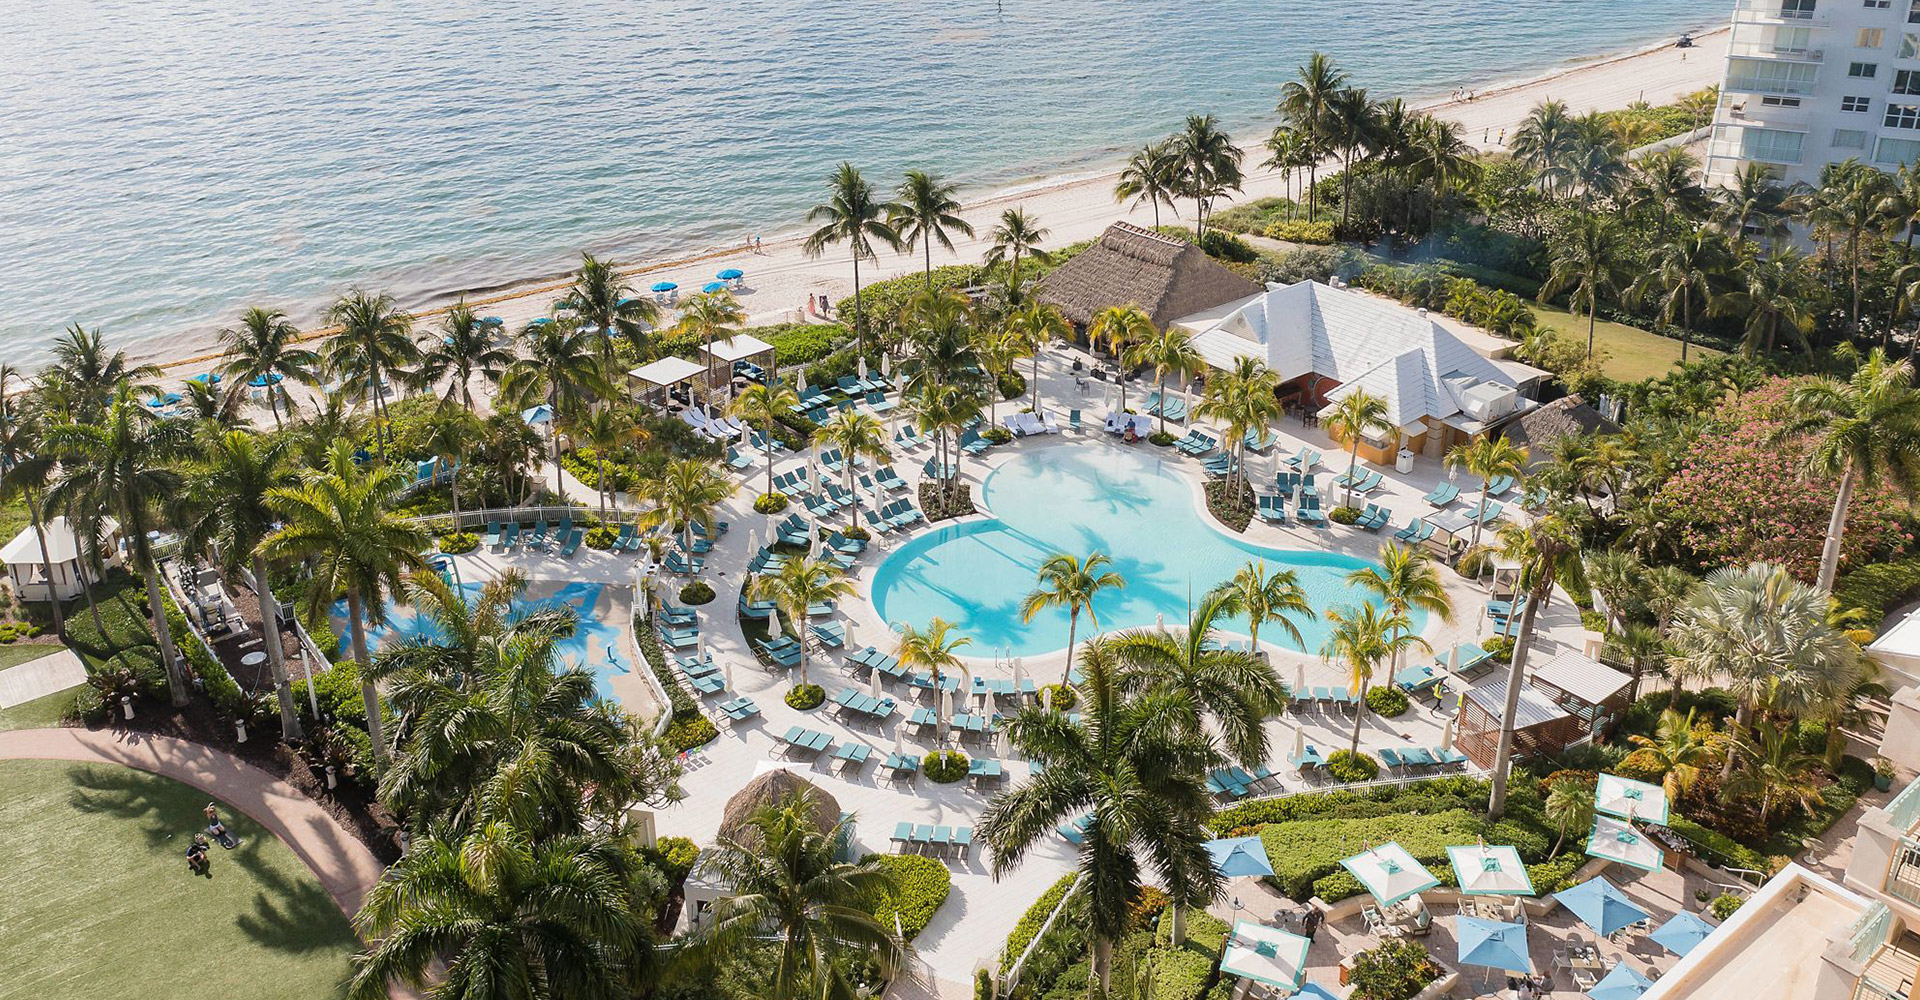 Ritz Carlton Key Biscayne Pool by Holland Engineering